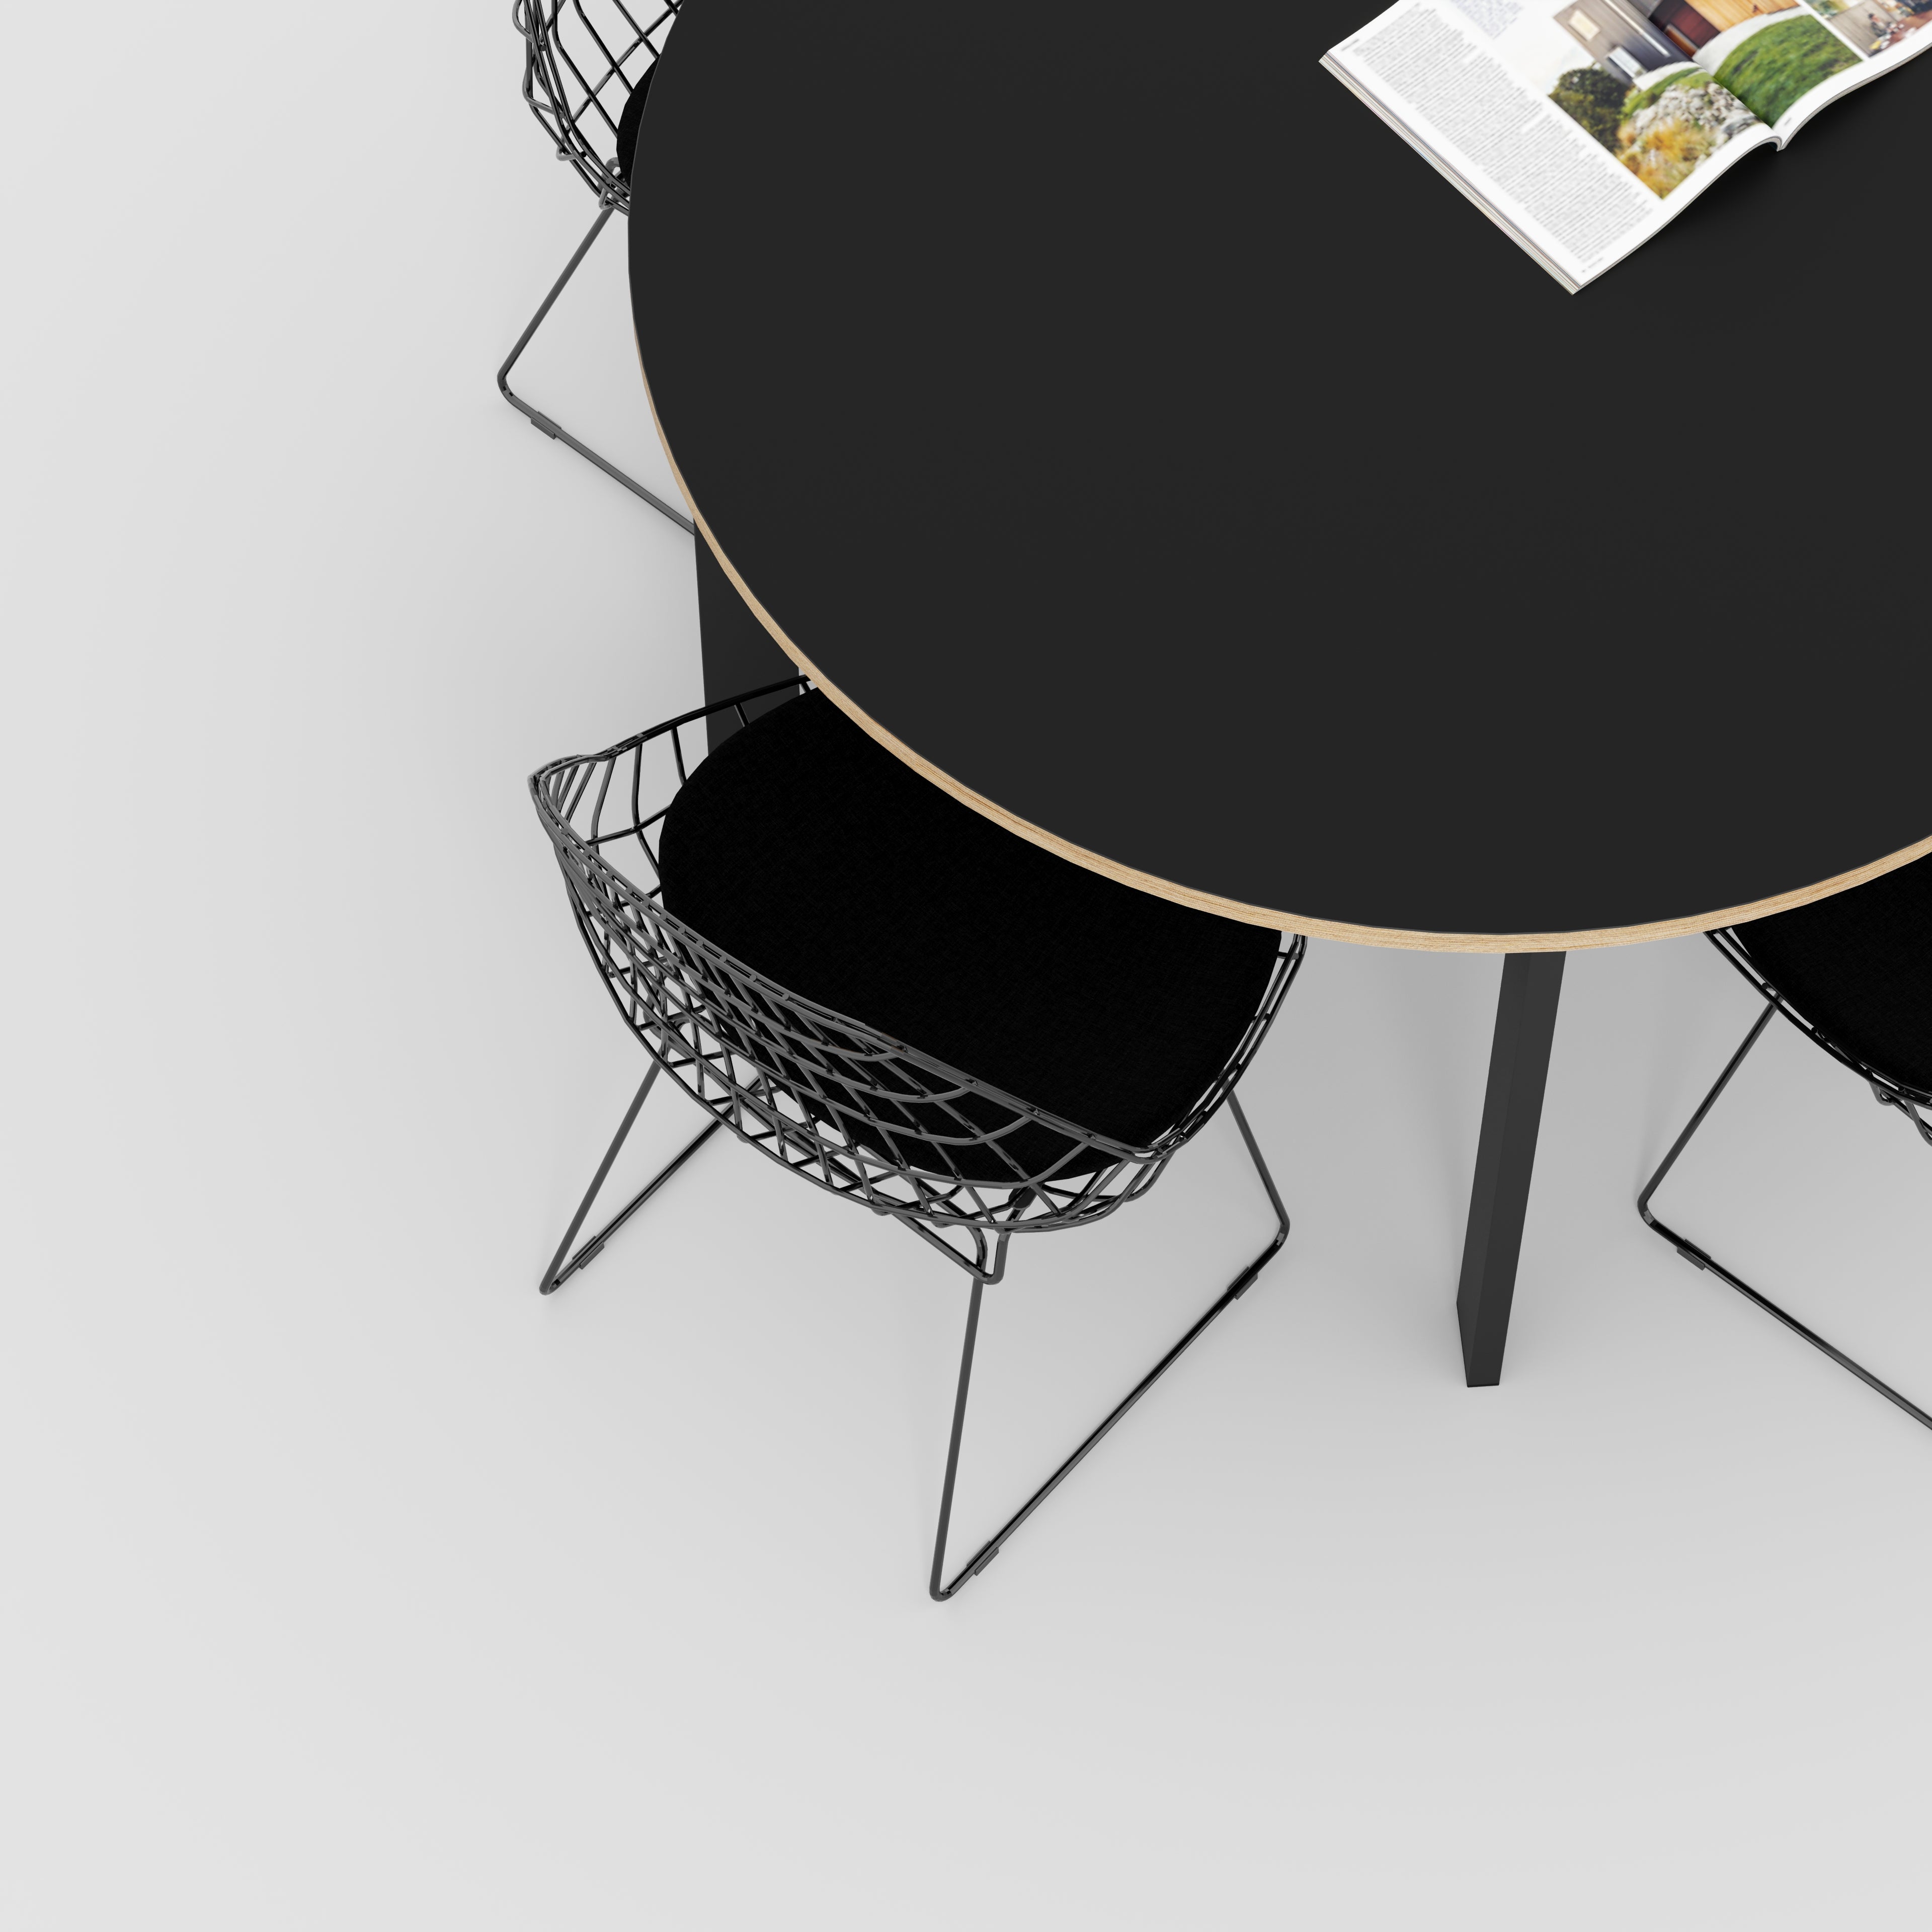 Round Table with Black Rectangular Single Pin Legs - Formica Diamond Black - 1200(dia) x 735(h)